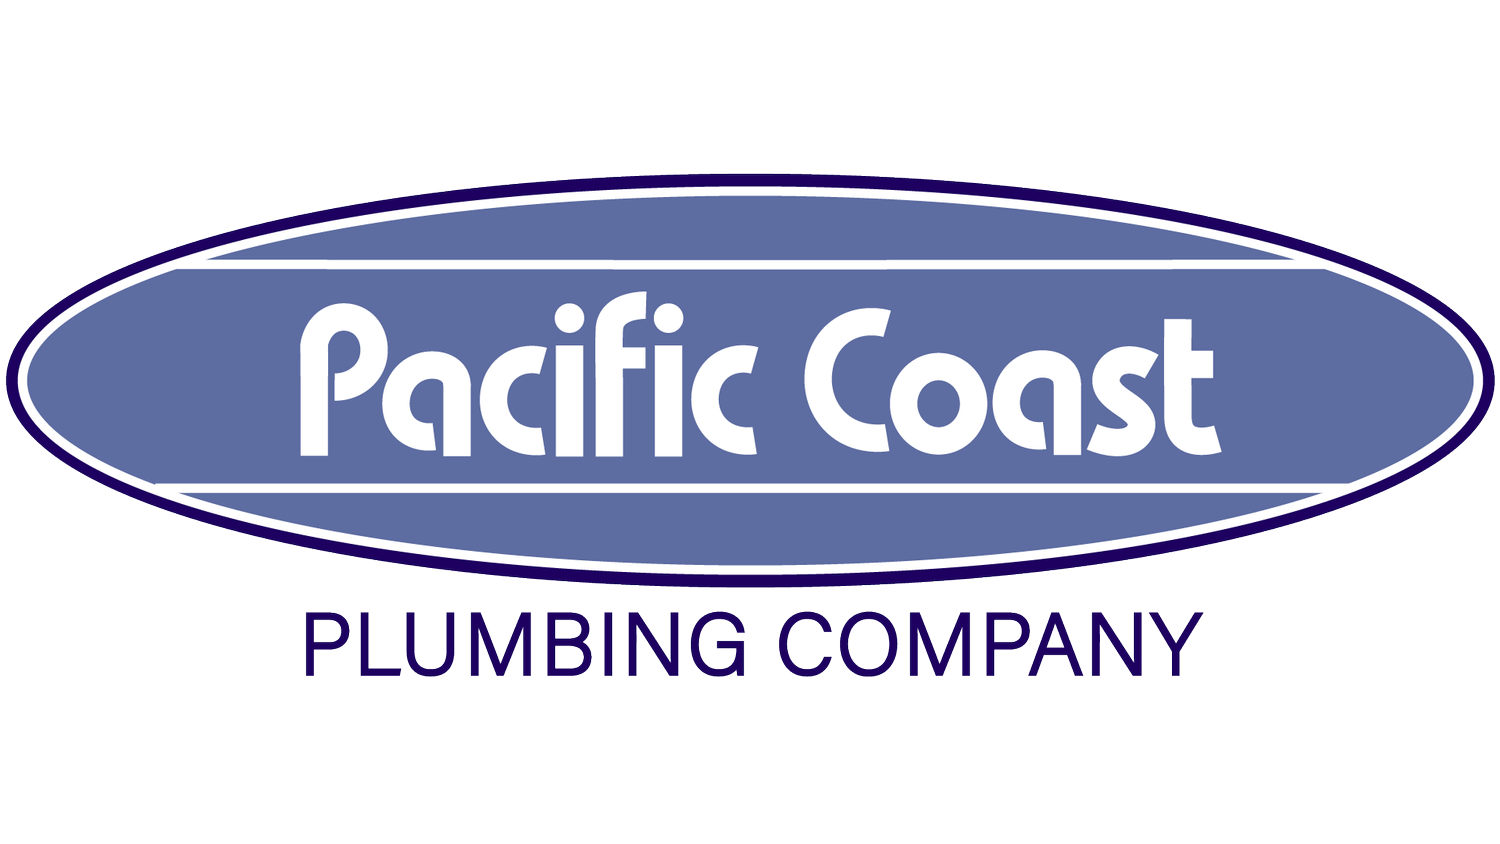 Pacific Coast Plumbing